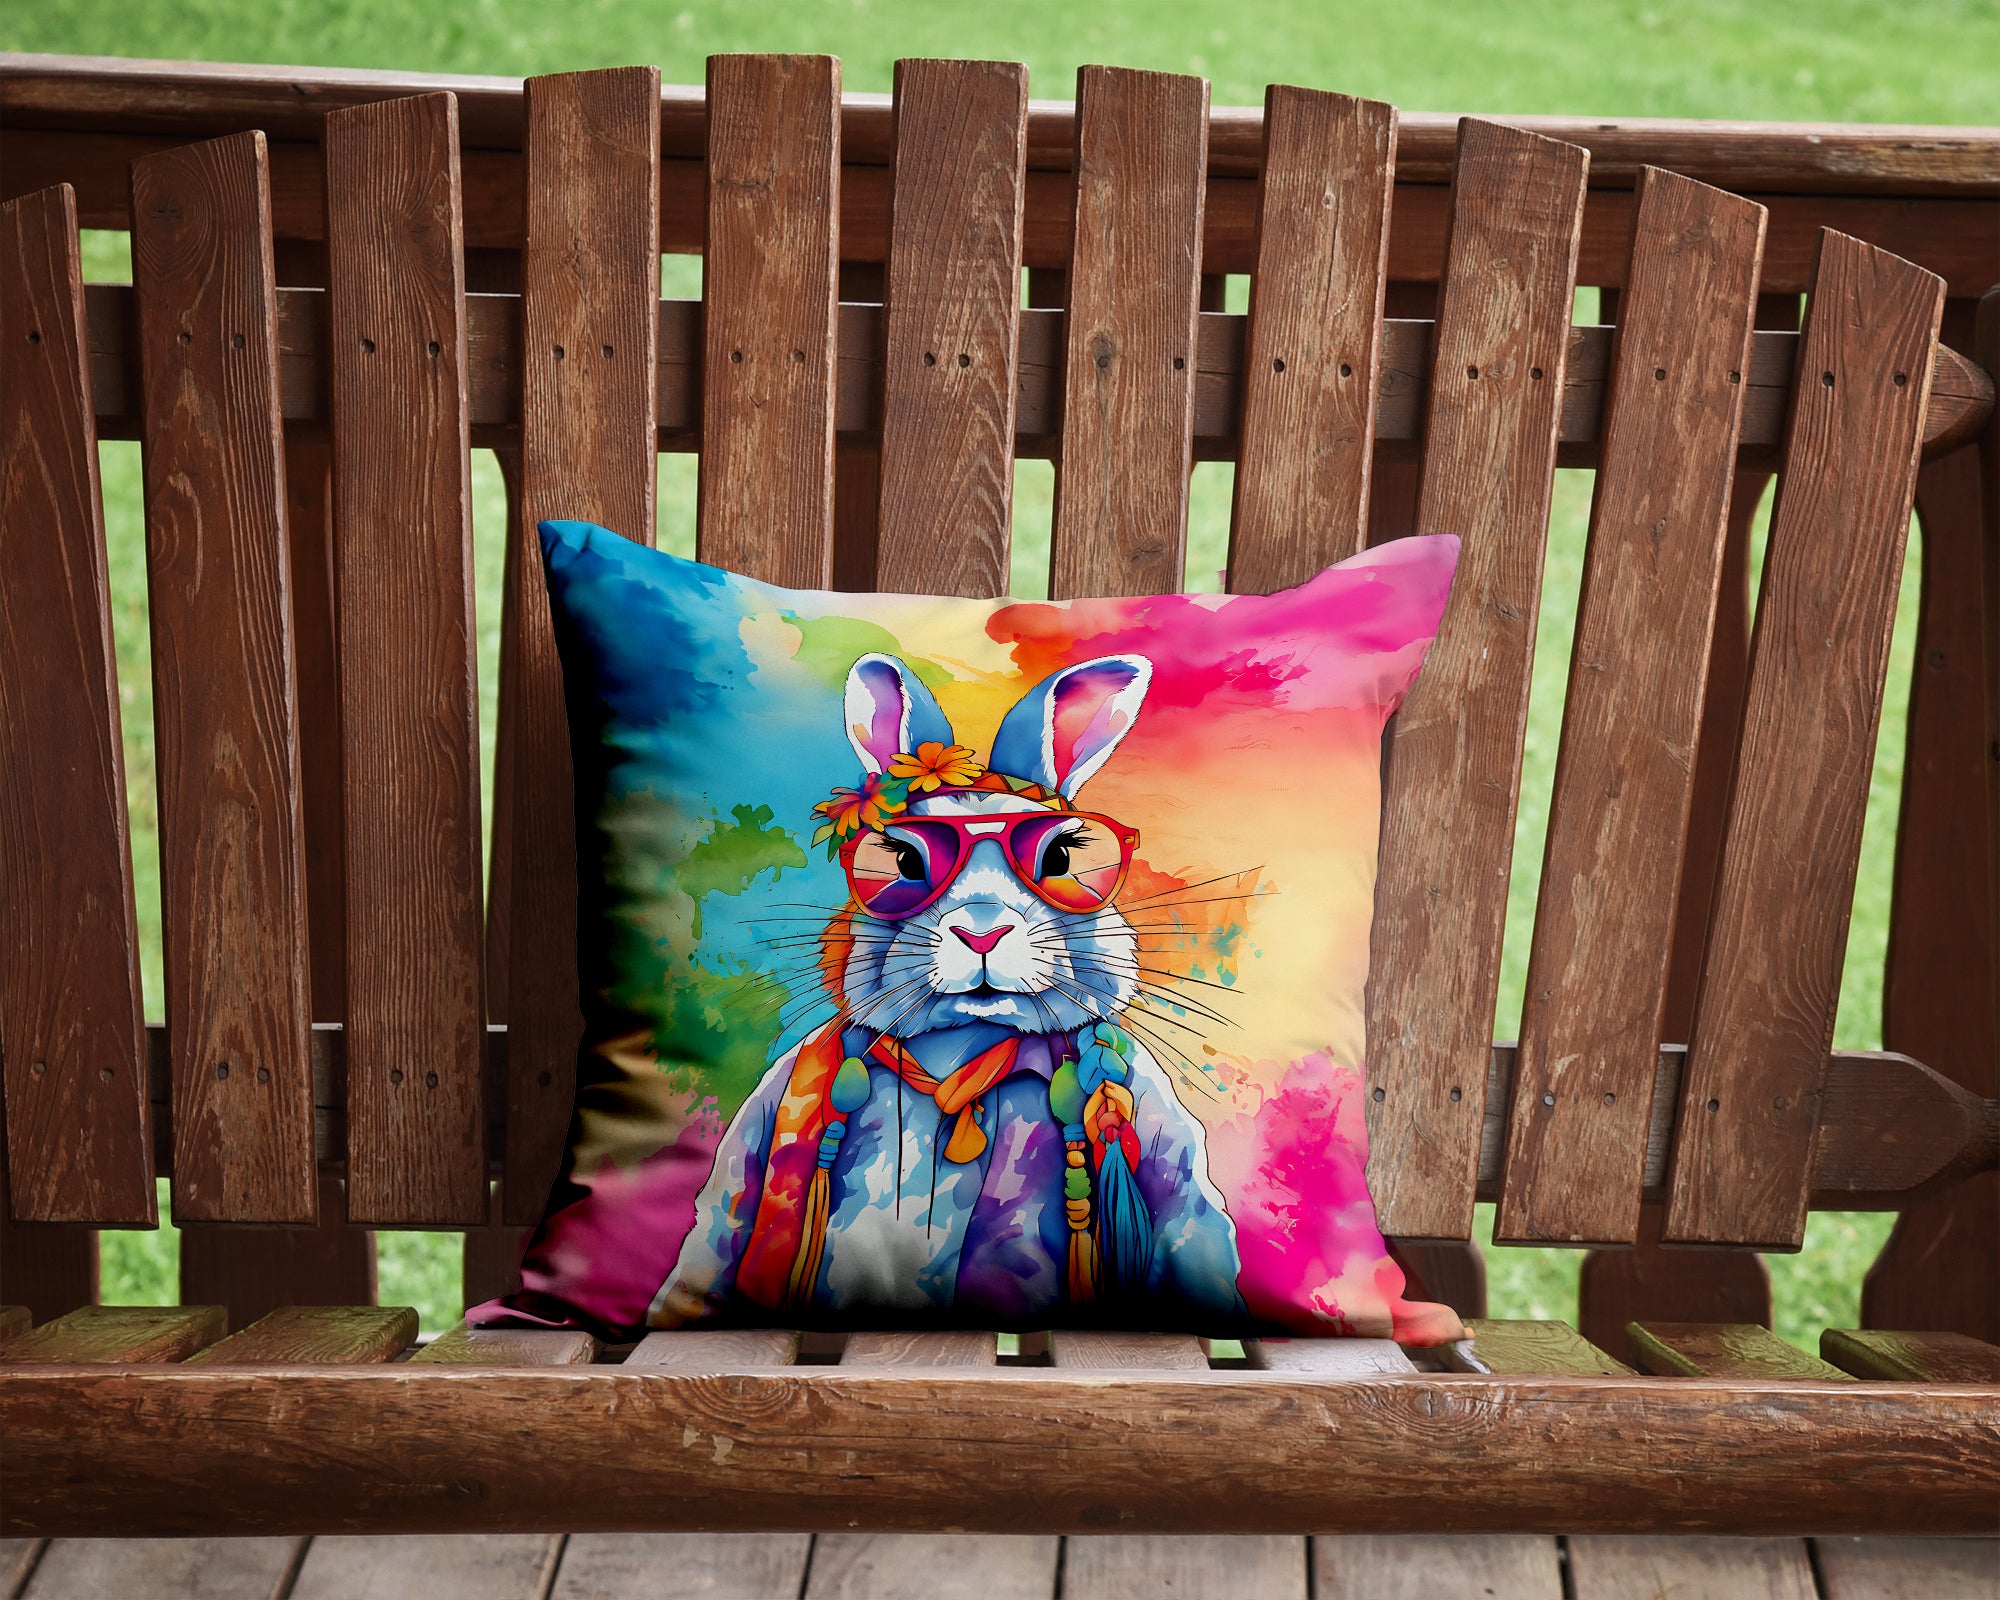 Buy this Hippie Animal Rabbit Throw Pillow